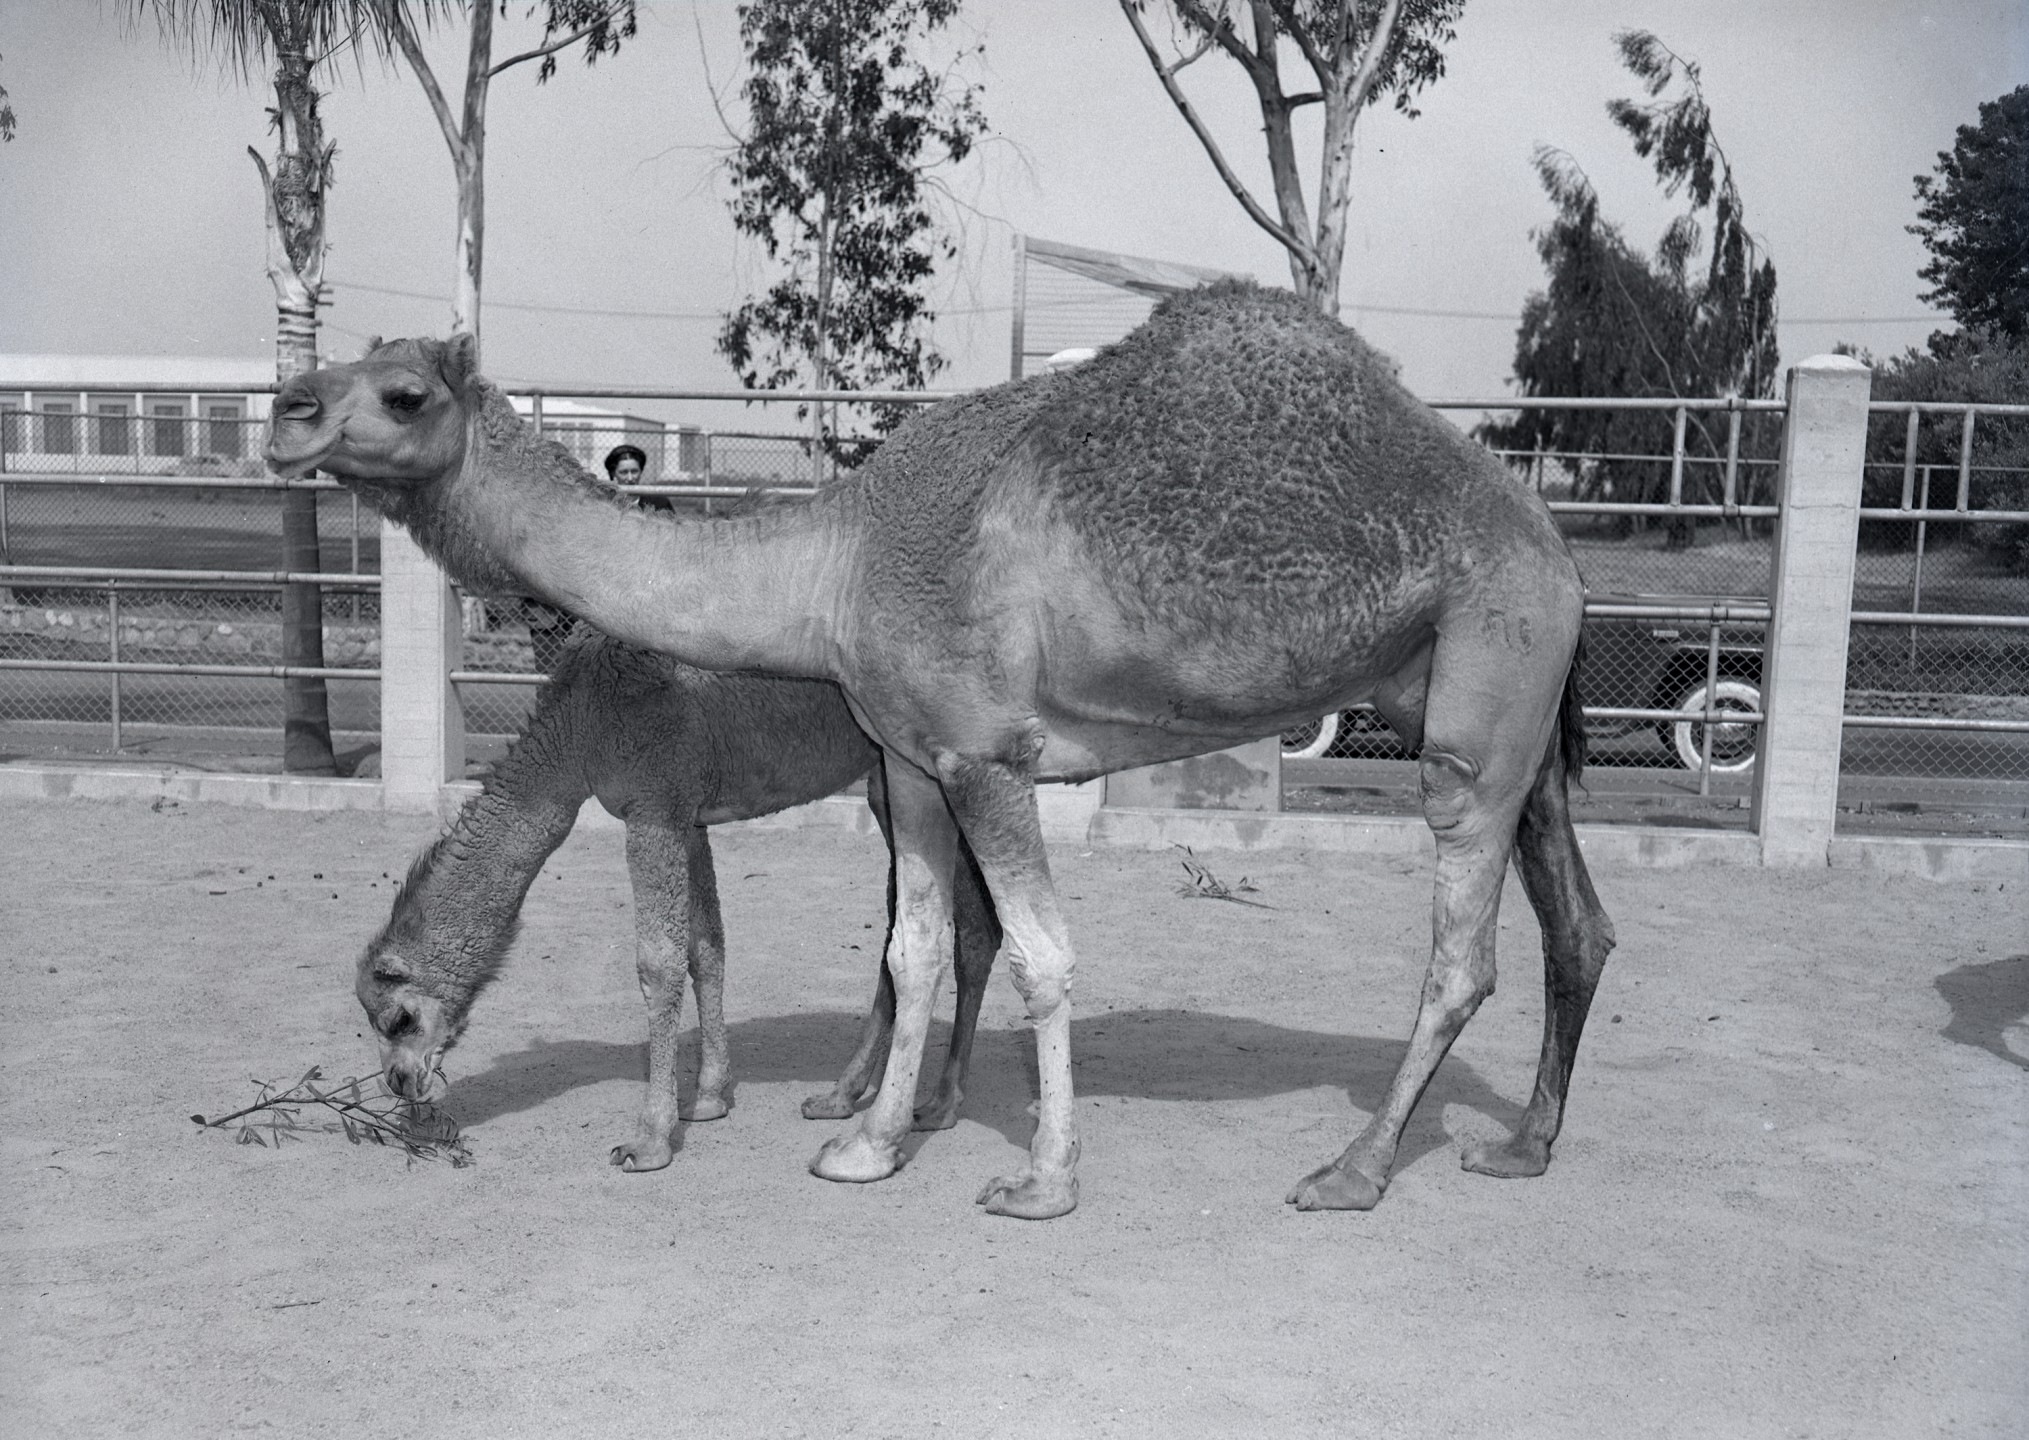 Scar and her calf, Sheik, dromedary camels